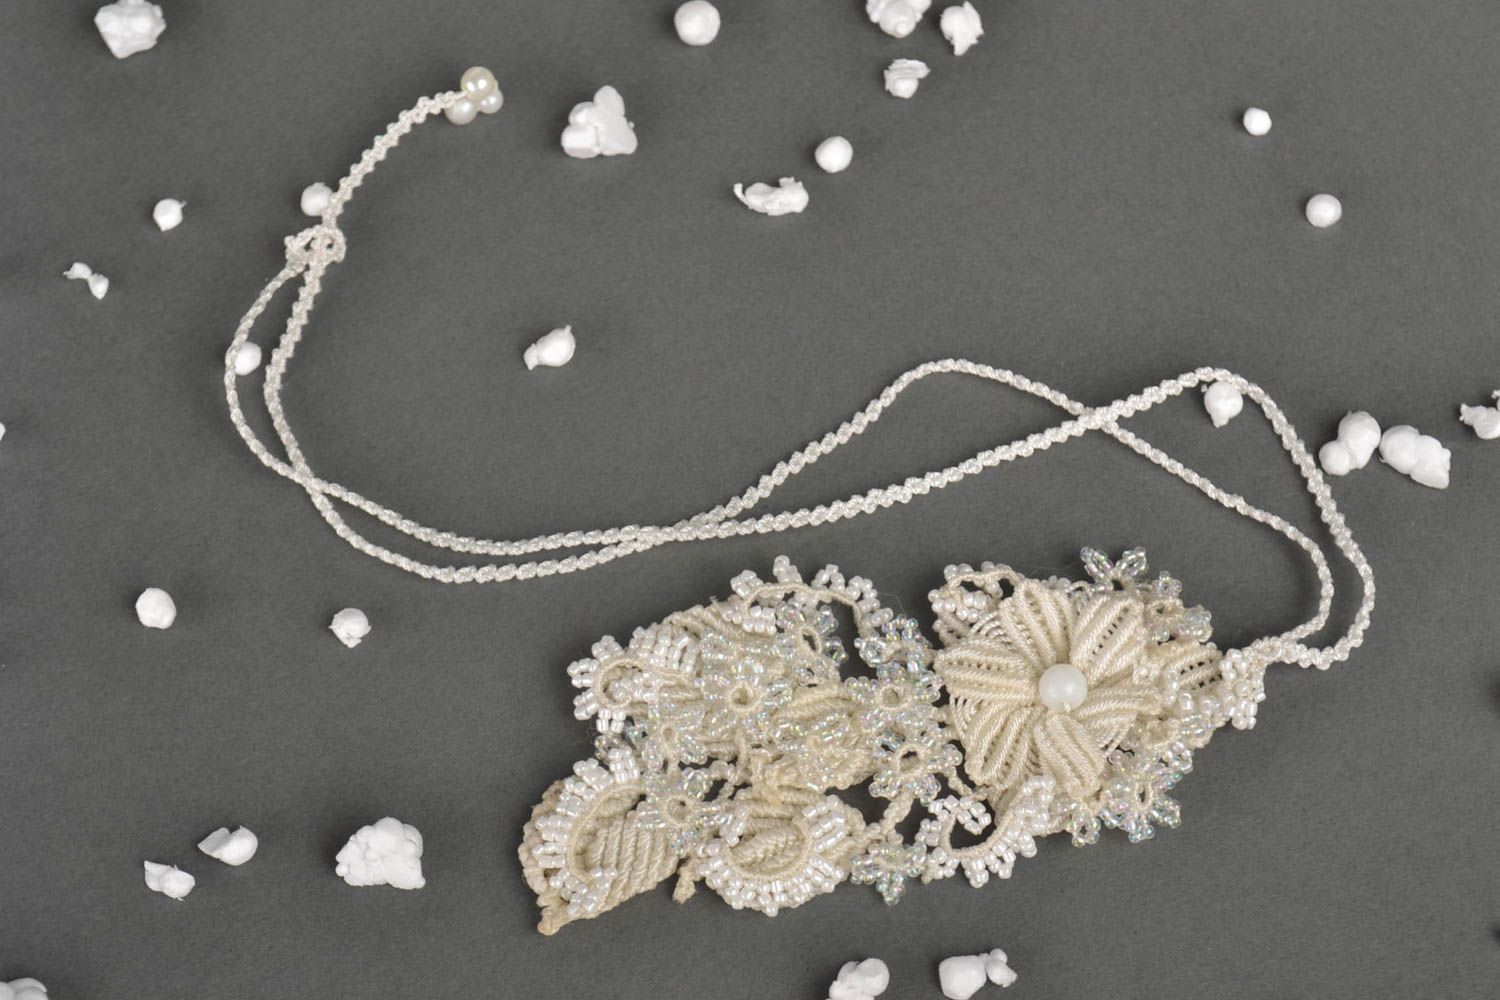 Handmade pendant beads pendant designer pendant gift ideas unusual jewelry photo 1